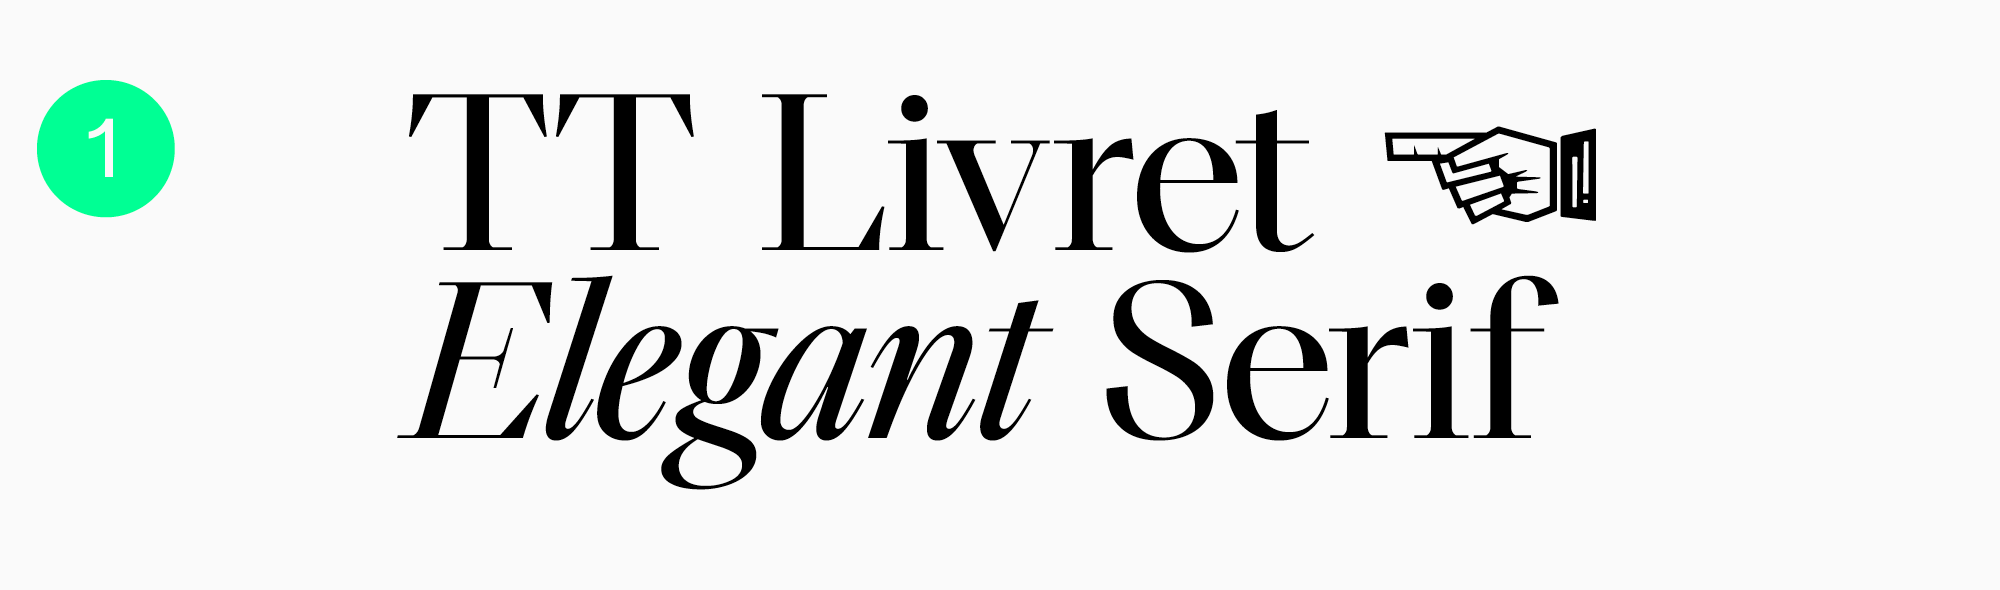 TT Livret—a modern serif free without a vintage look